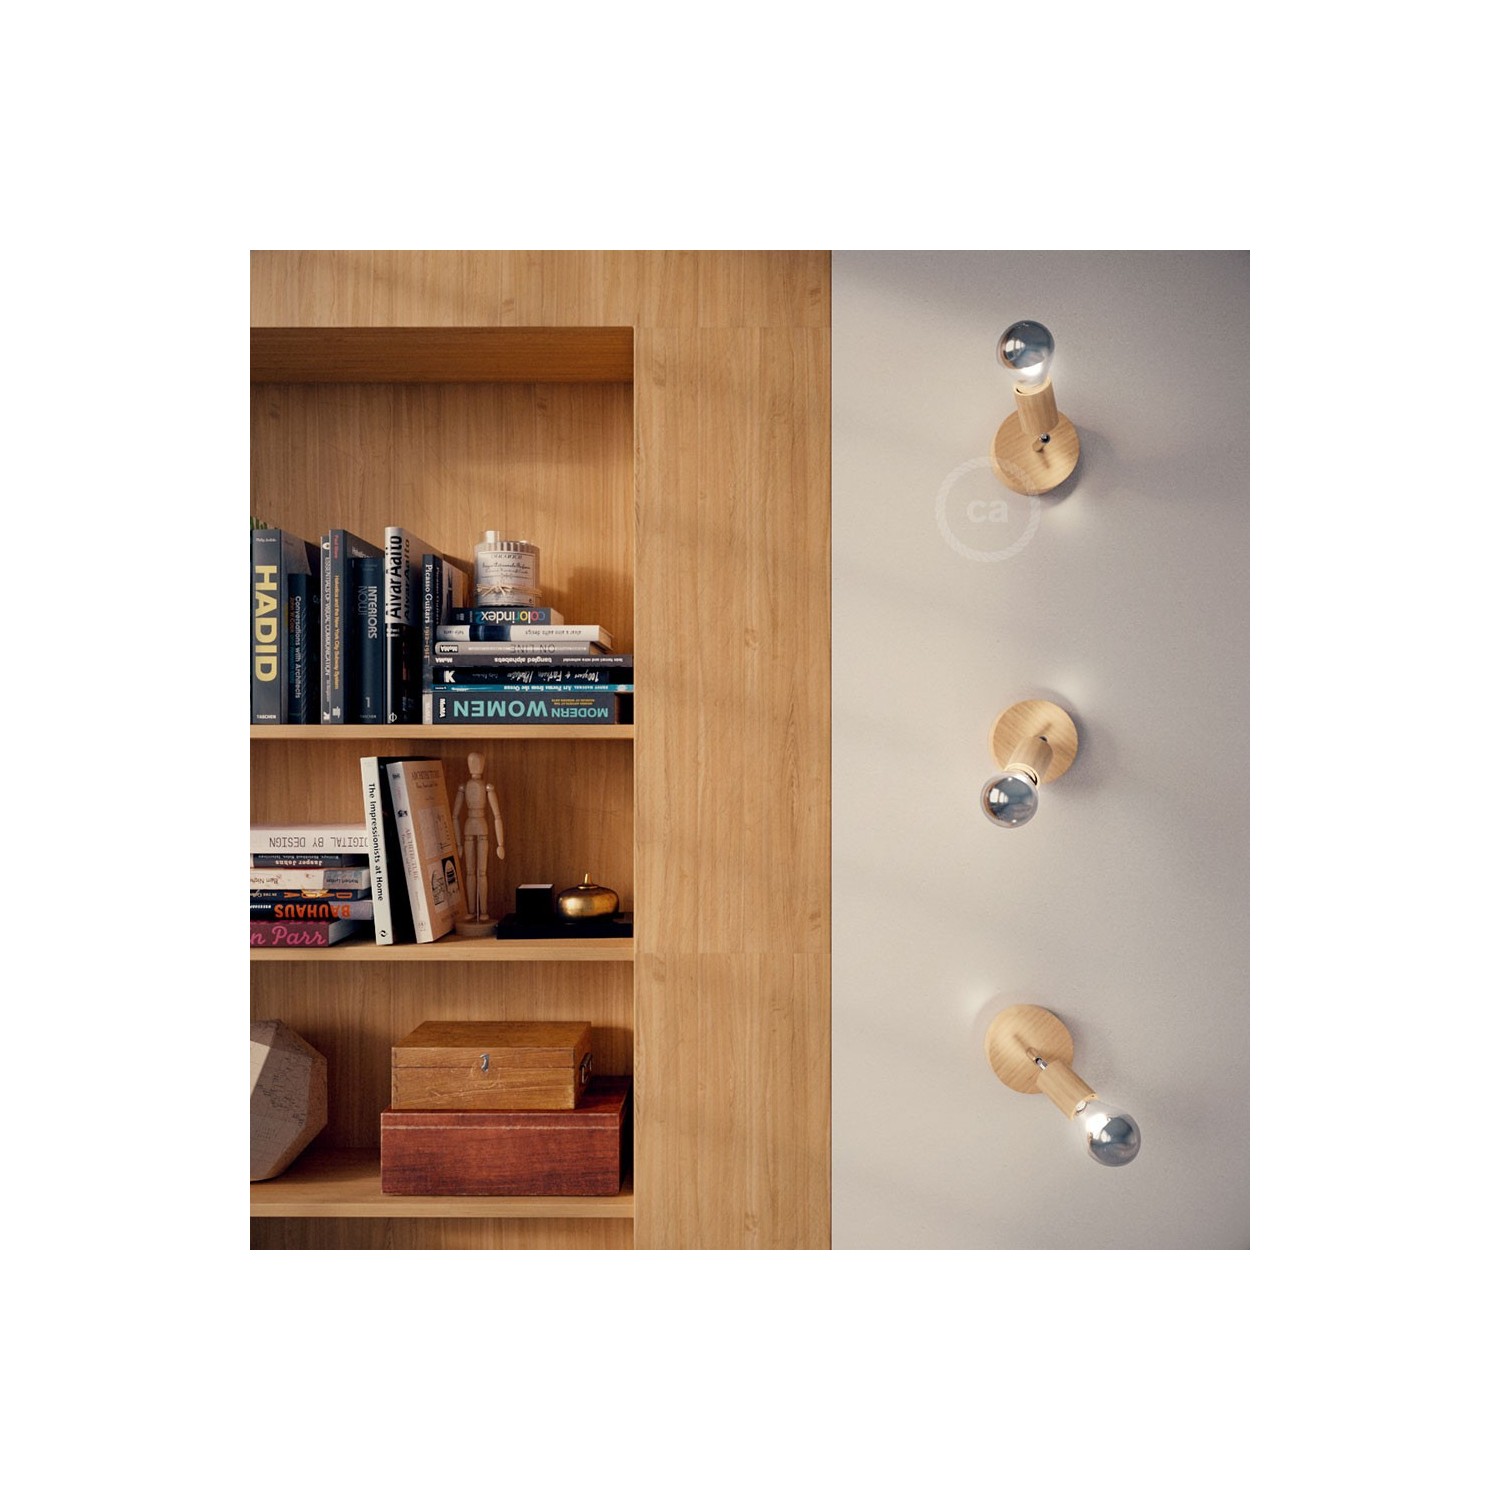 Fermaluce Natural, leseno svetilo za stropno ali stensko montažo